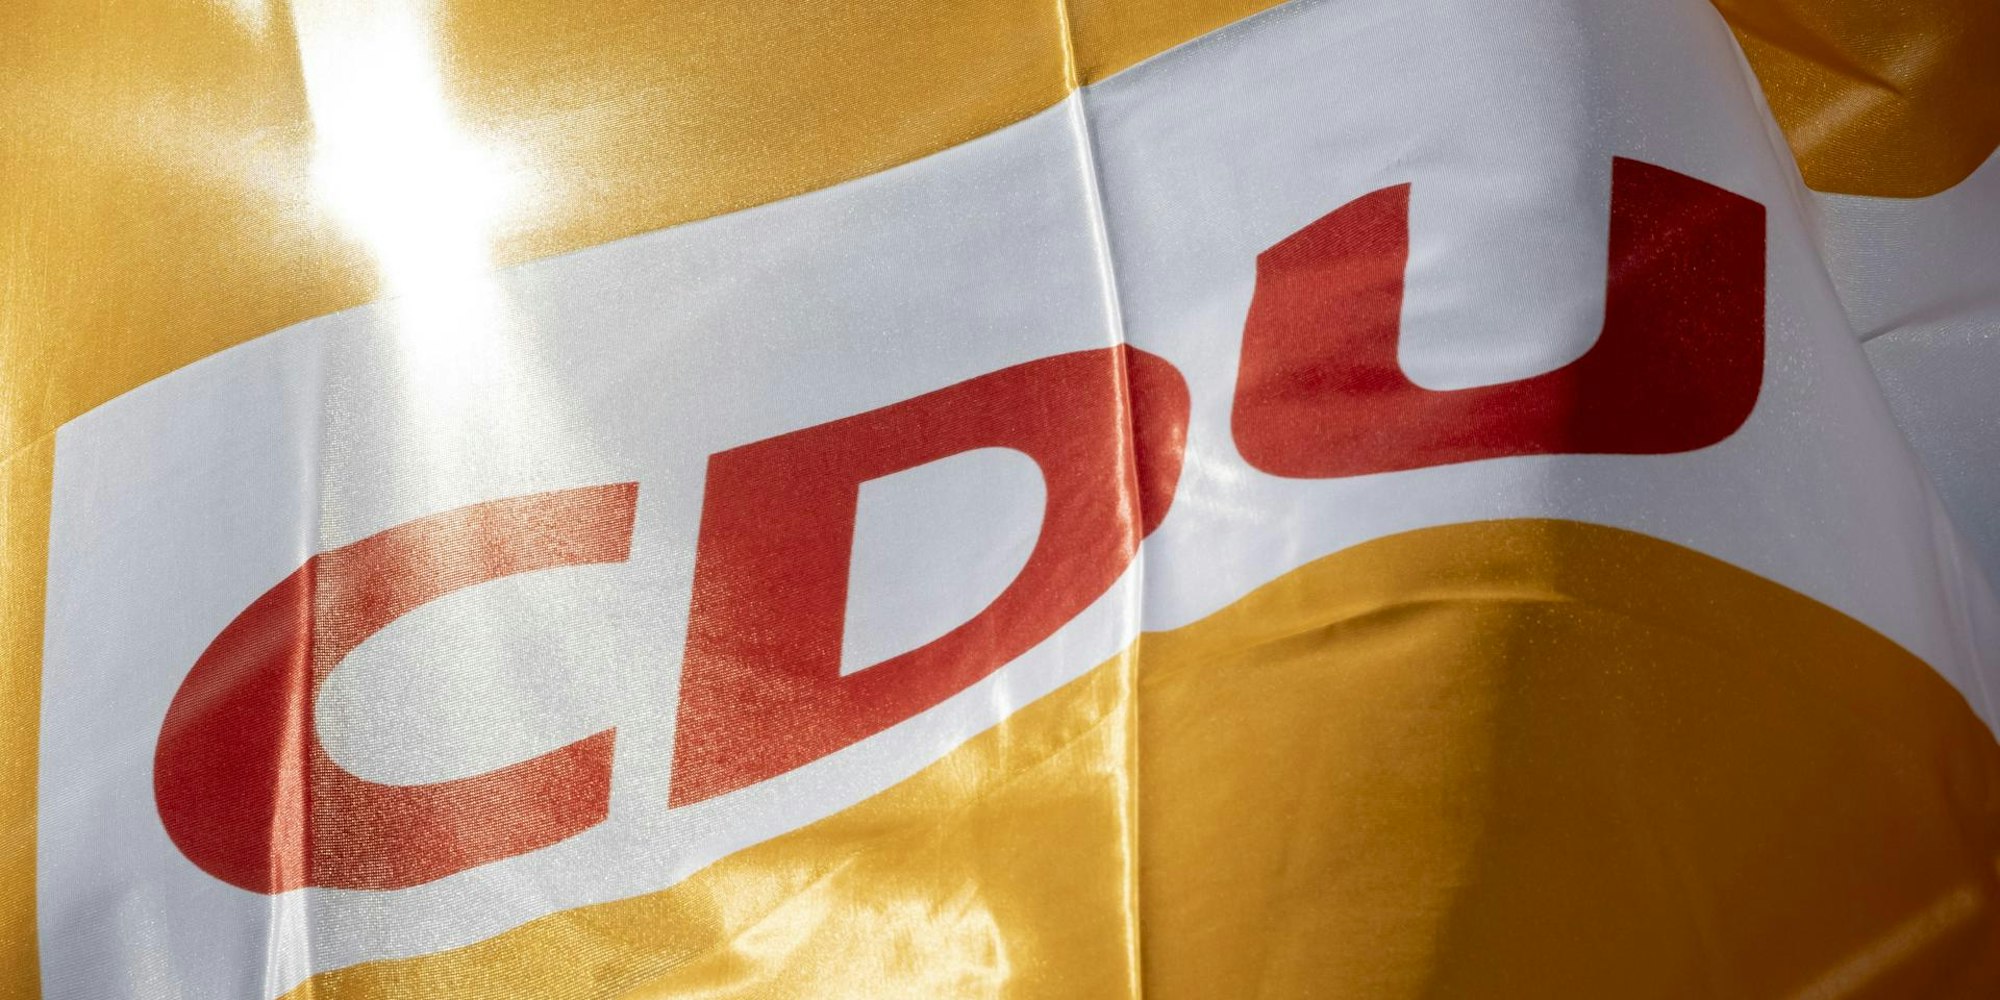 CDU Symbol dpa 151019